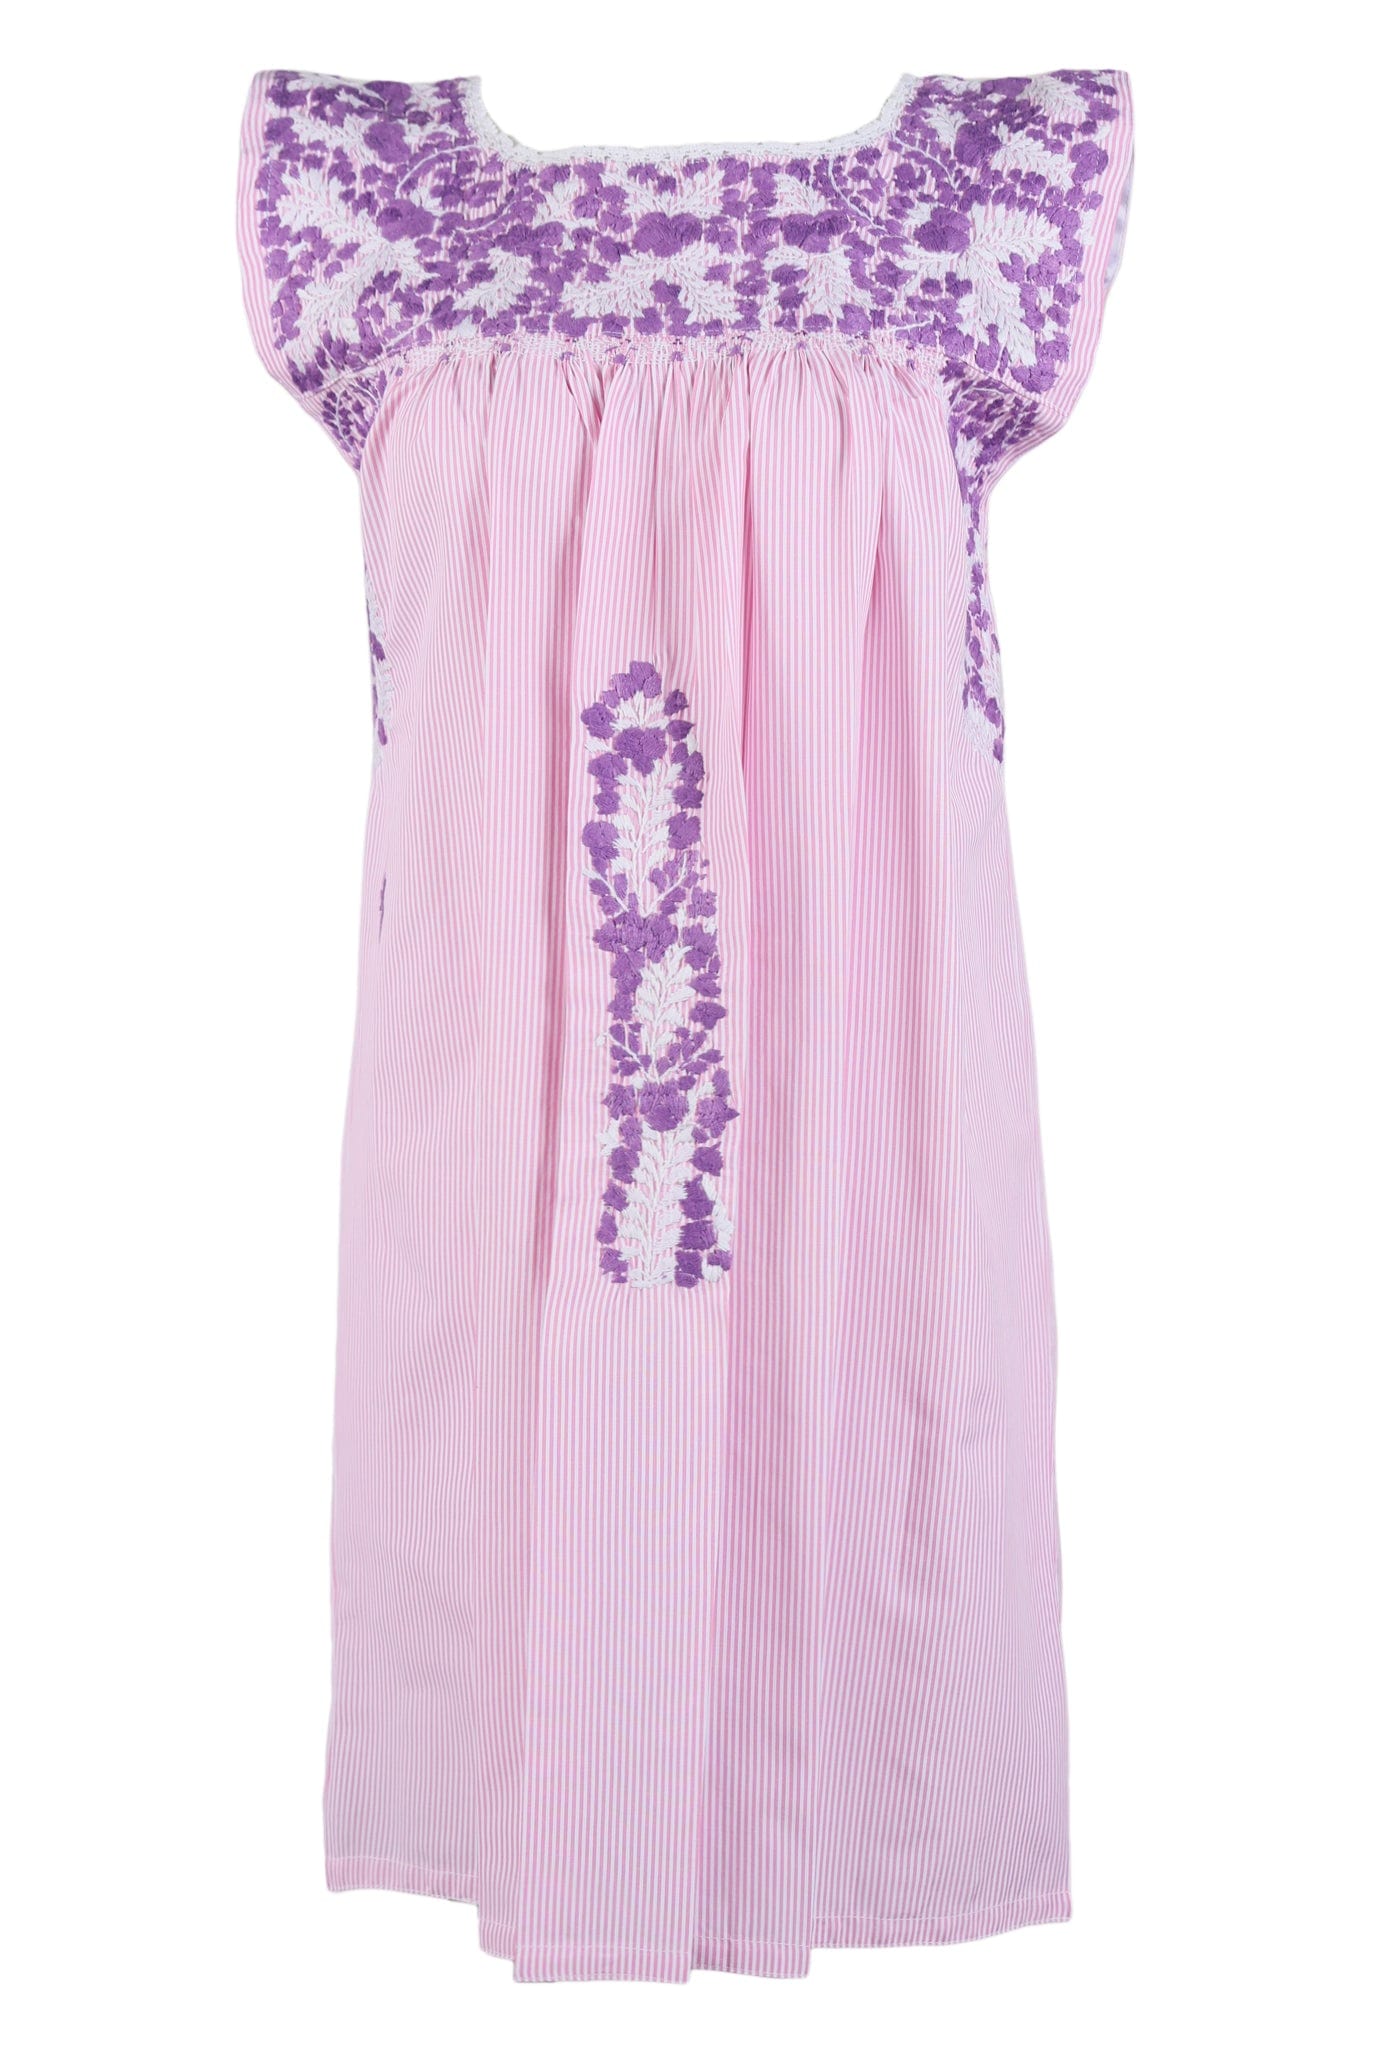 Flores Short Dress Dress Pastel Purpura y Nieve